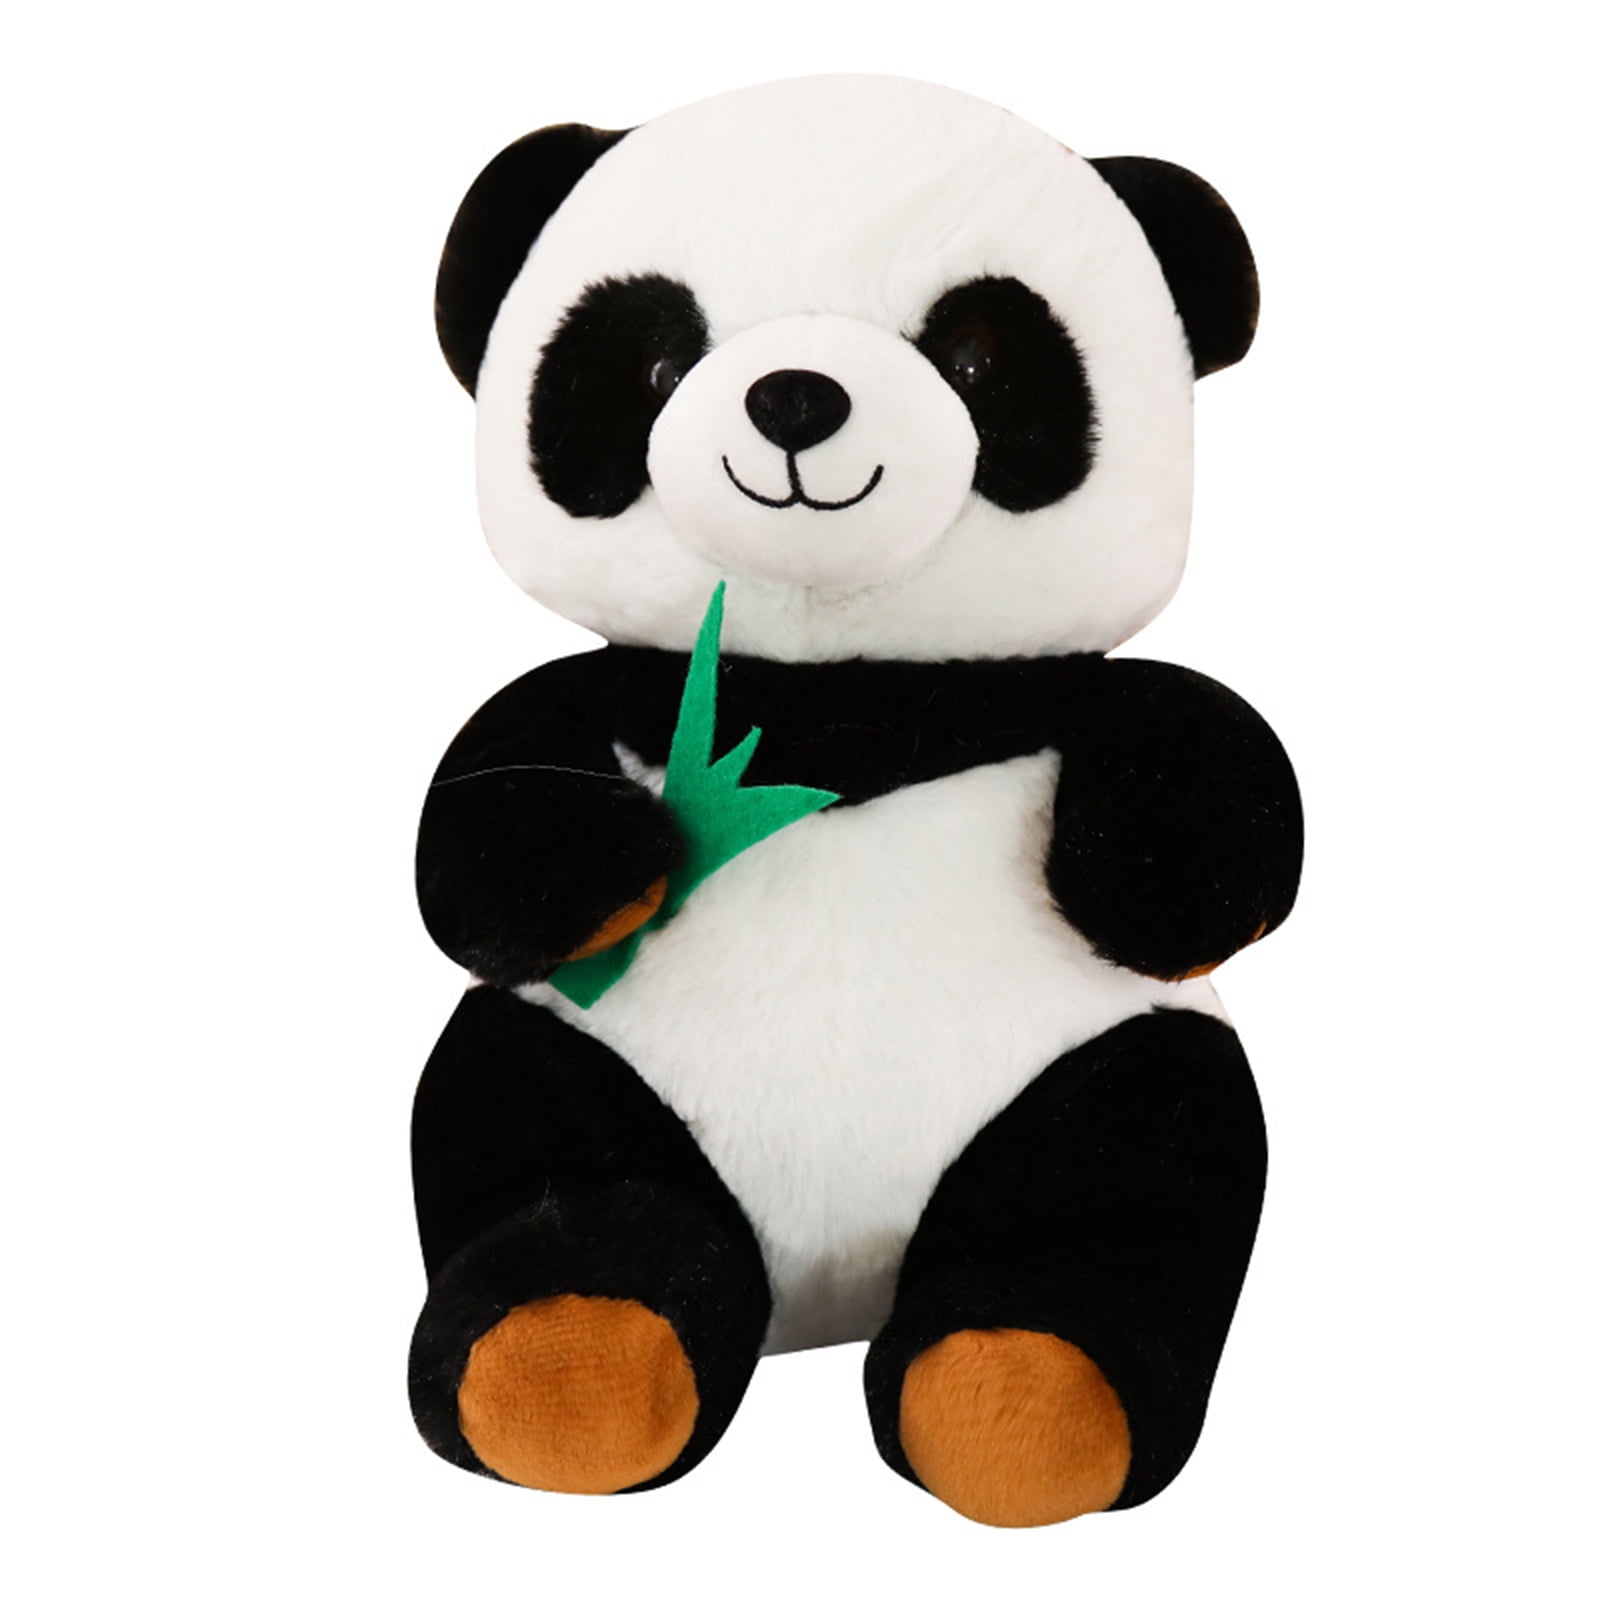 New Pelican Small stuffed sitting Panda and Panda Pillow Cute Gift for Kid 